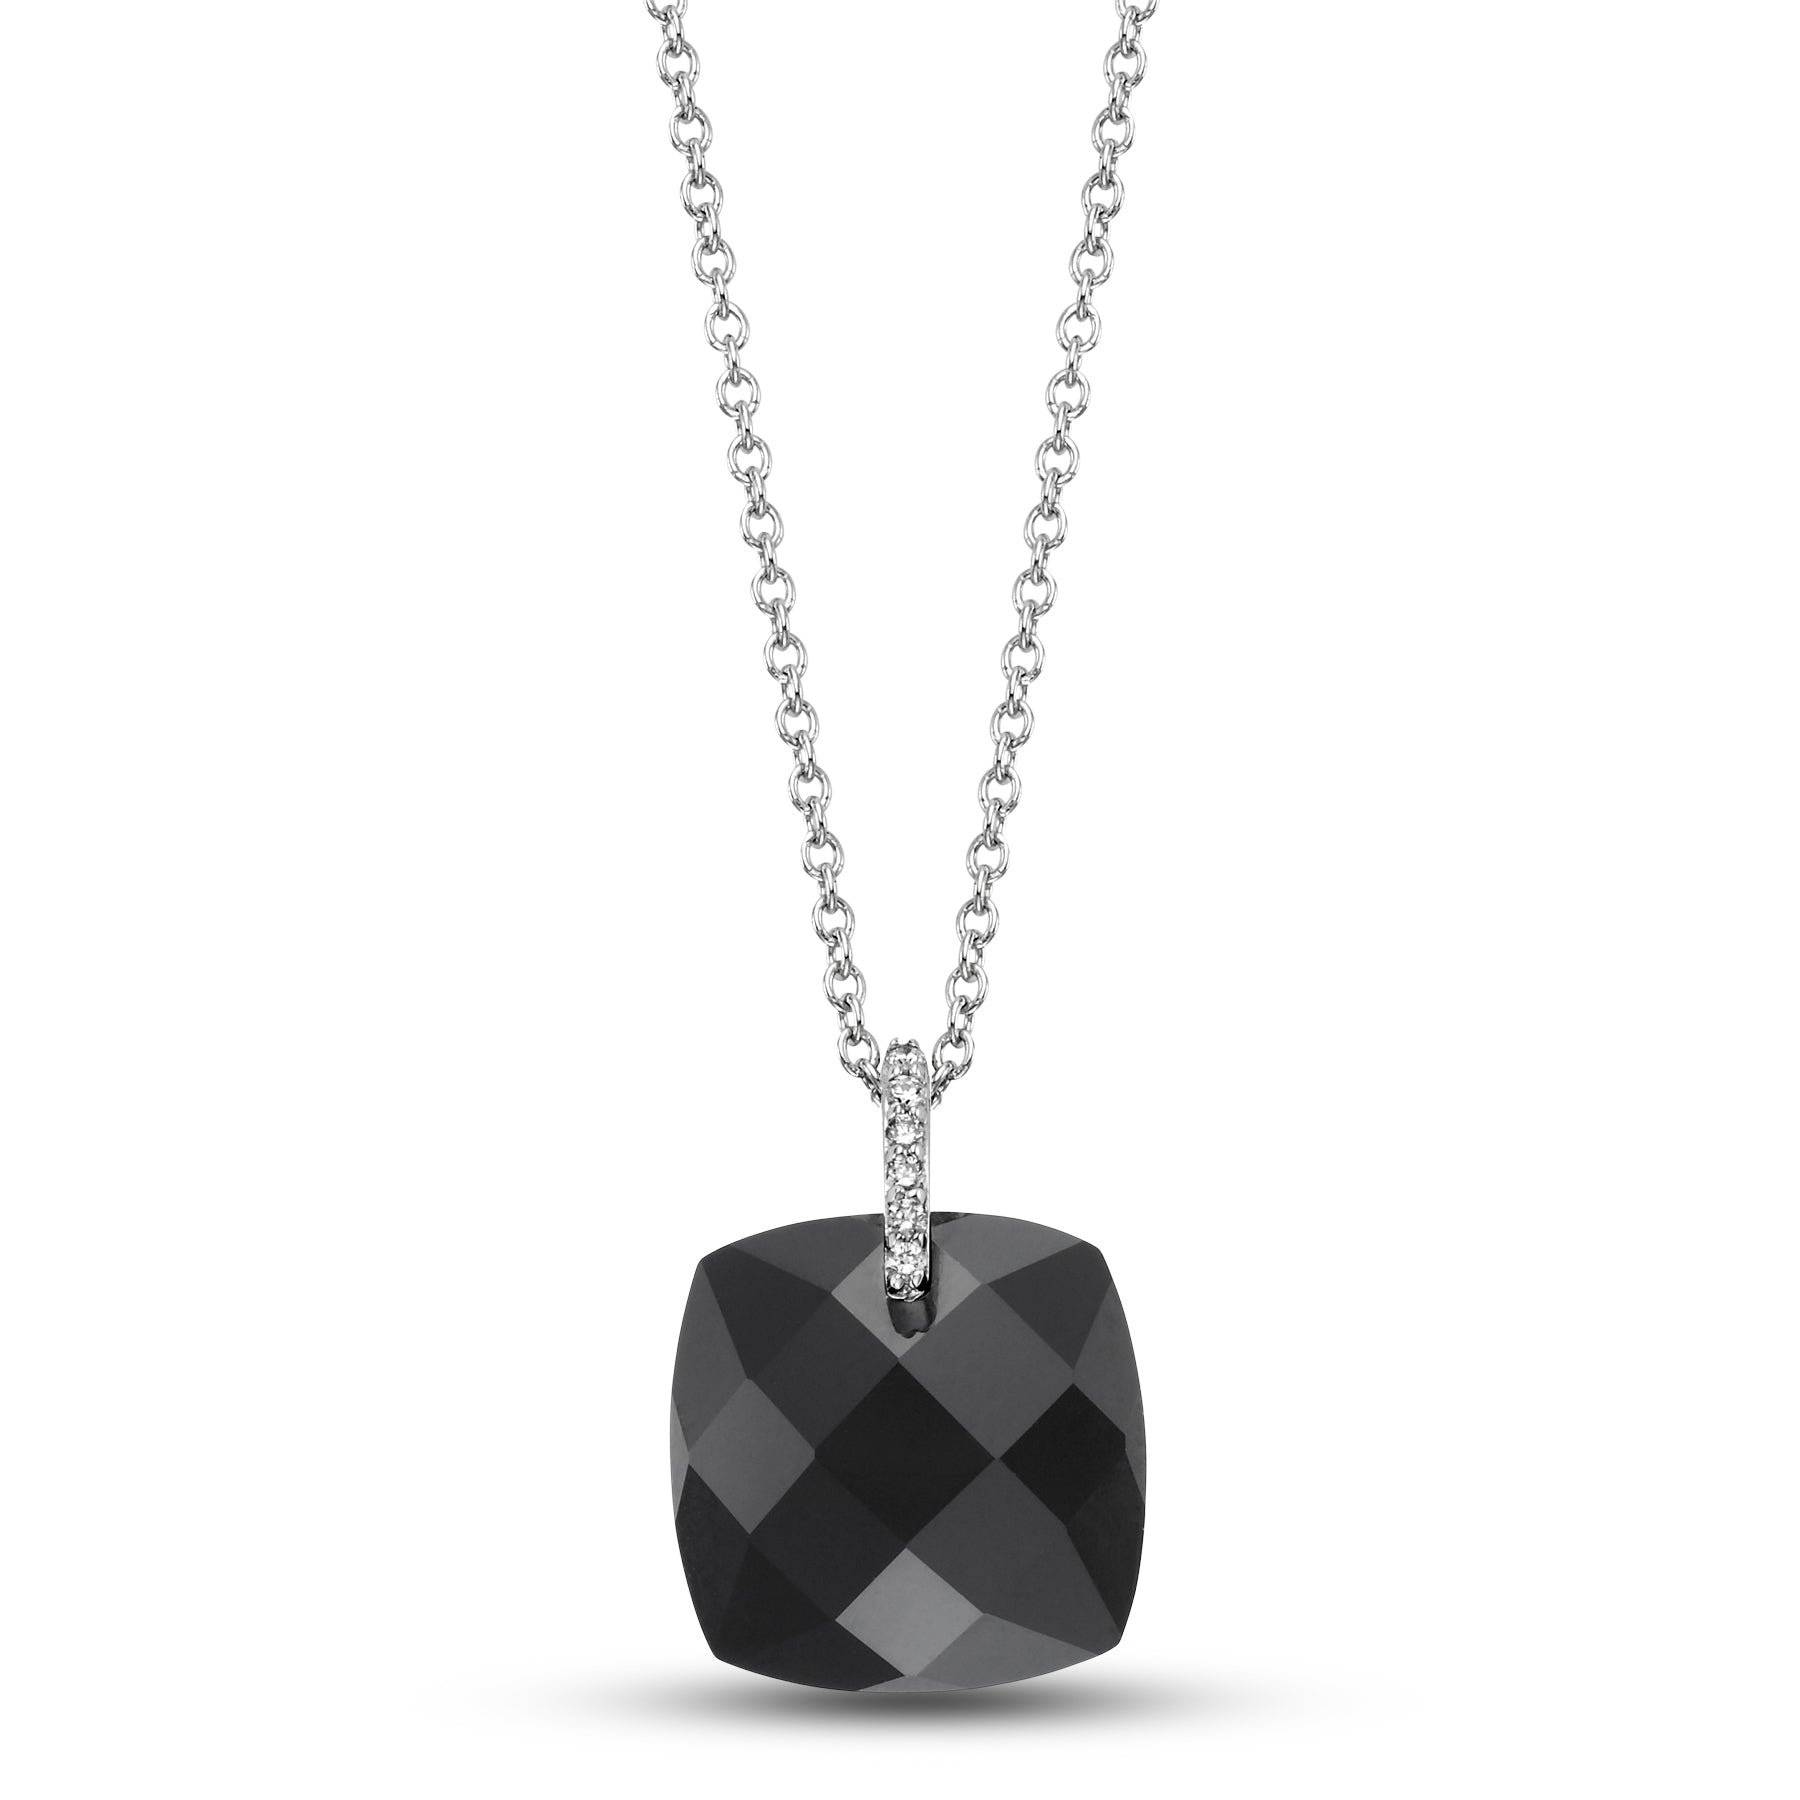 14k White Gold Black Onyx Faceted Cushion VS Diamond Pendant Necklace 18"